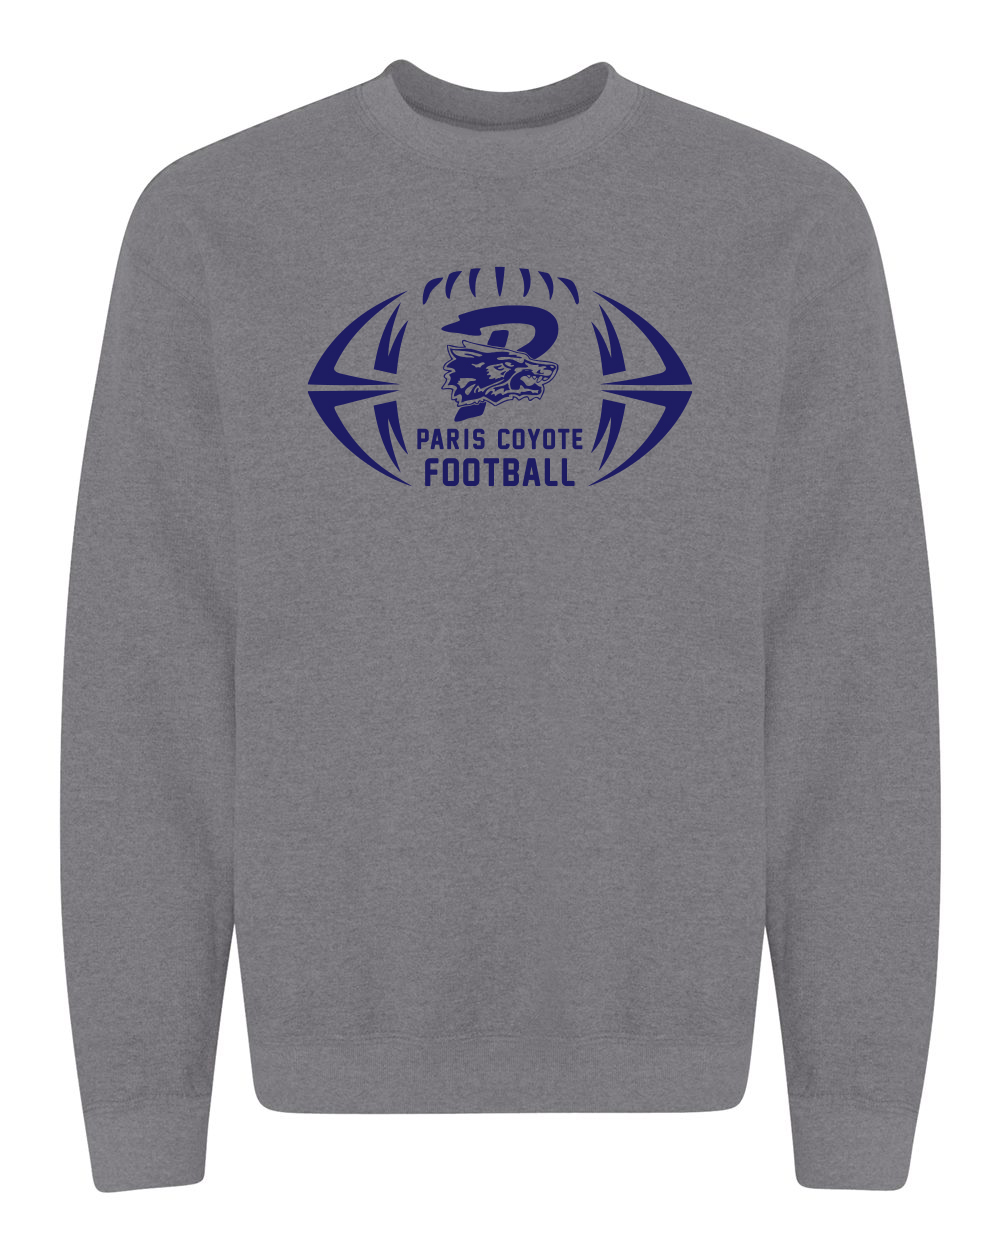 Paris Coyote Football - Salt River Shirt Company